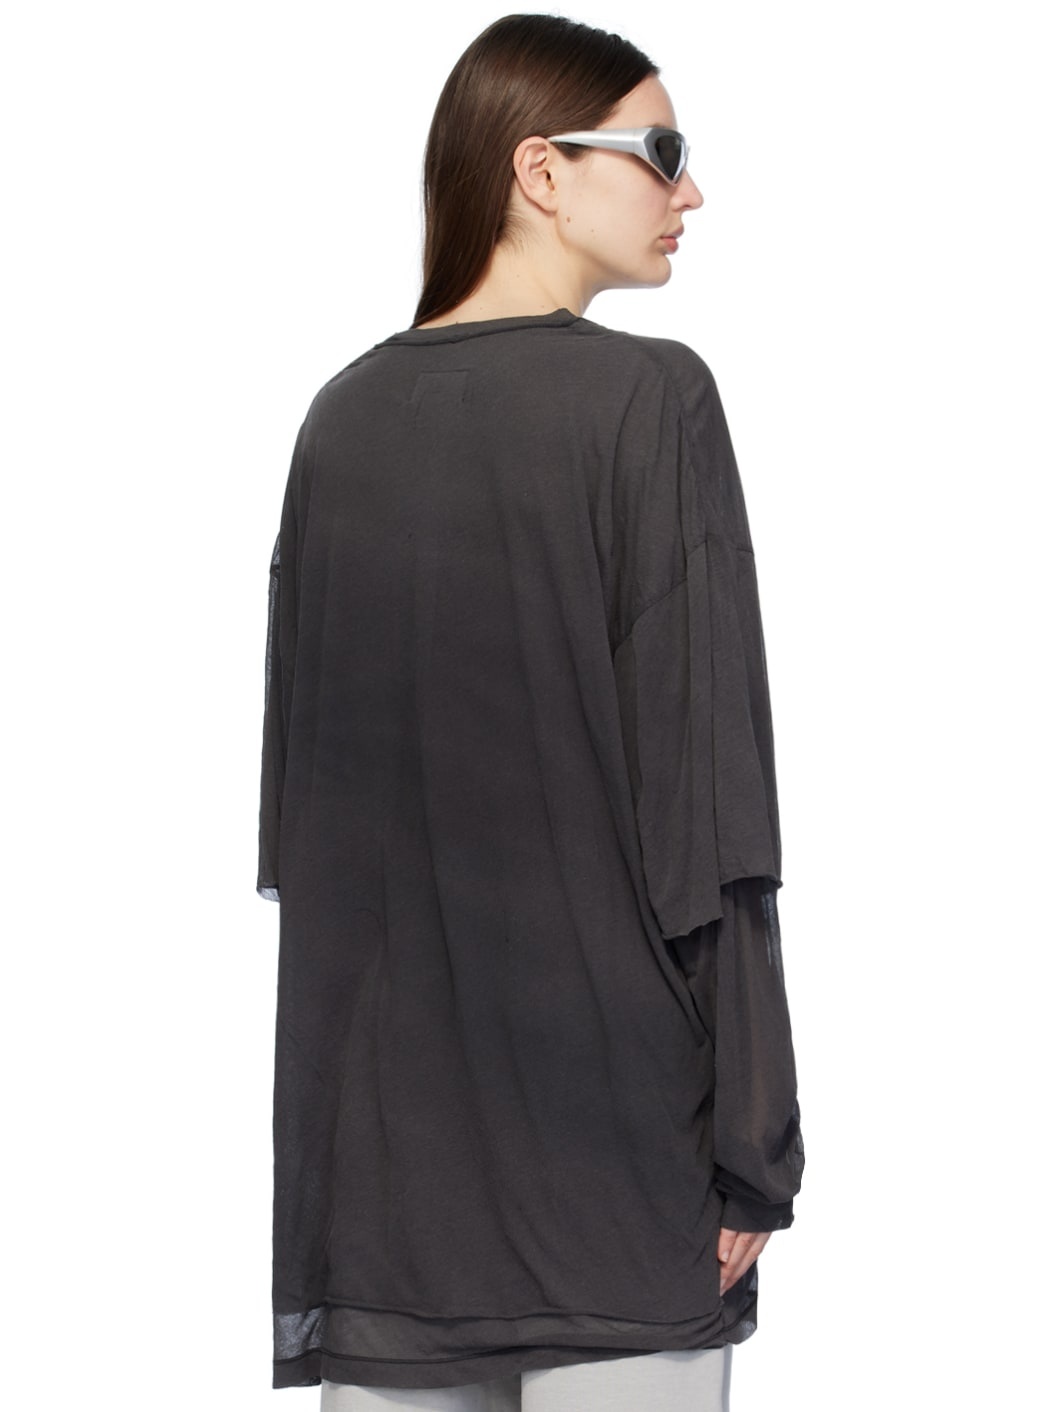 Black Layered Long Sleeve T-Shirt - 3